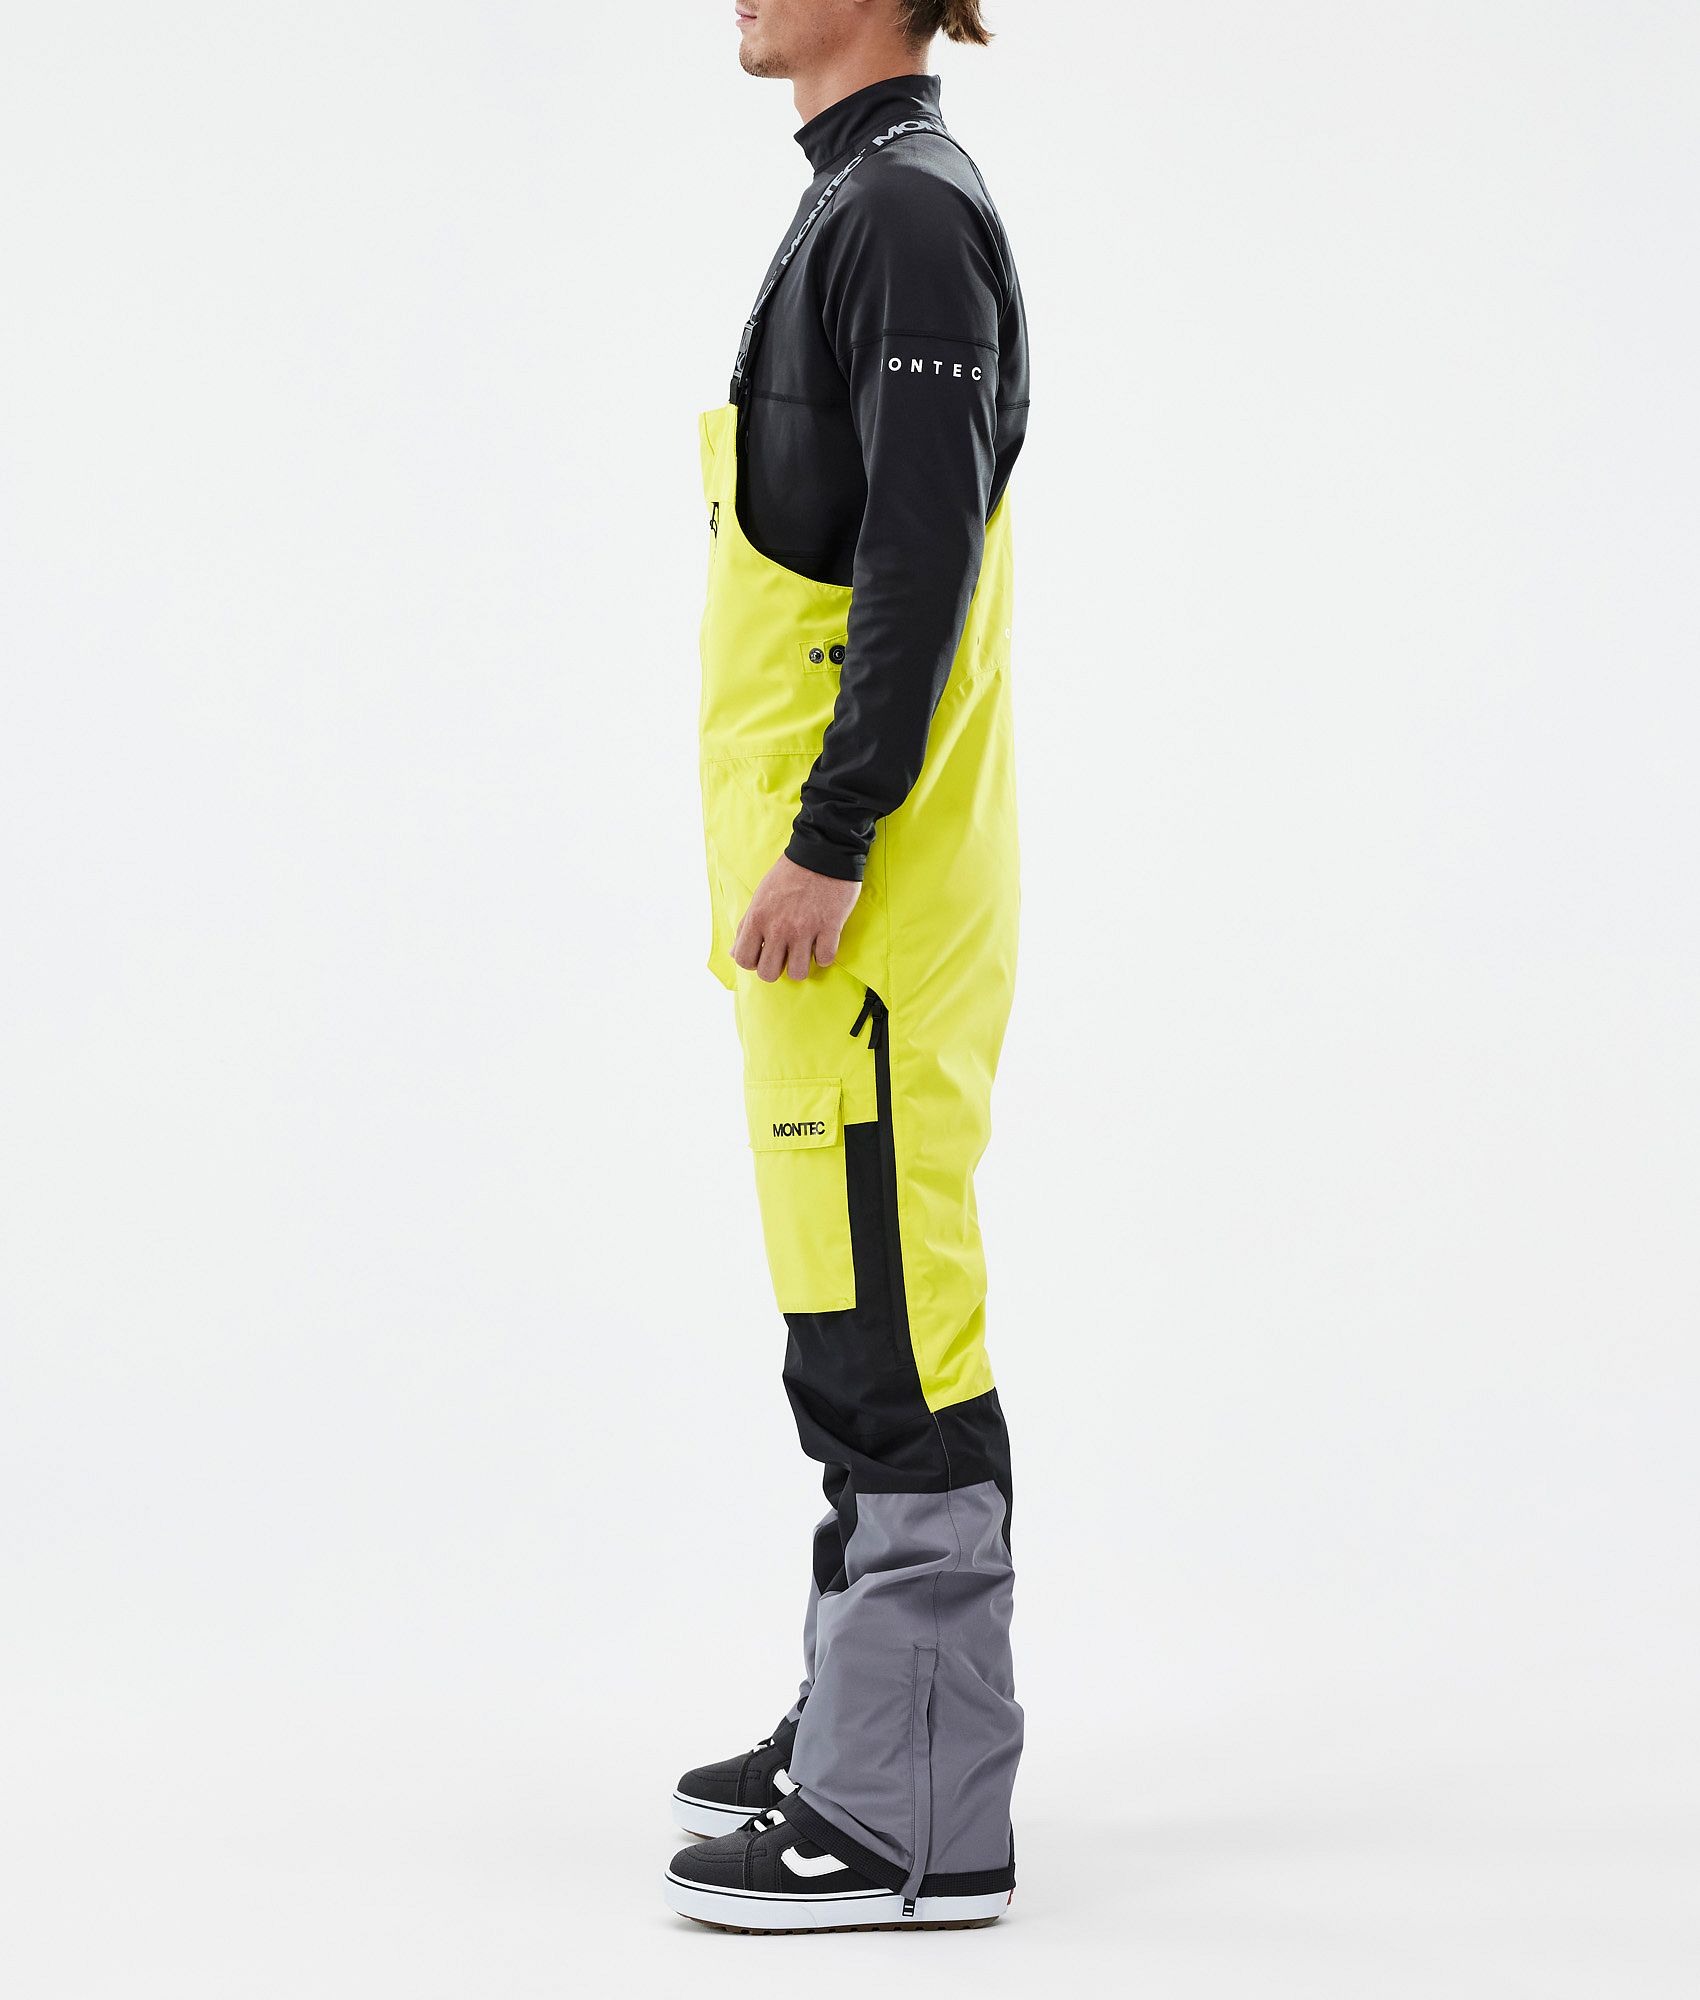 yellow pants | Styleforum